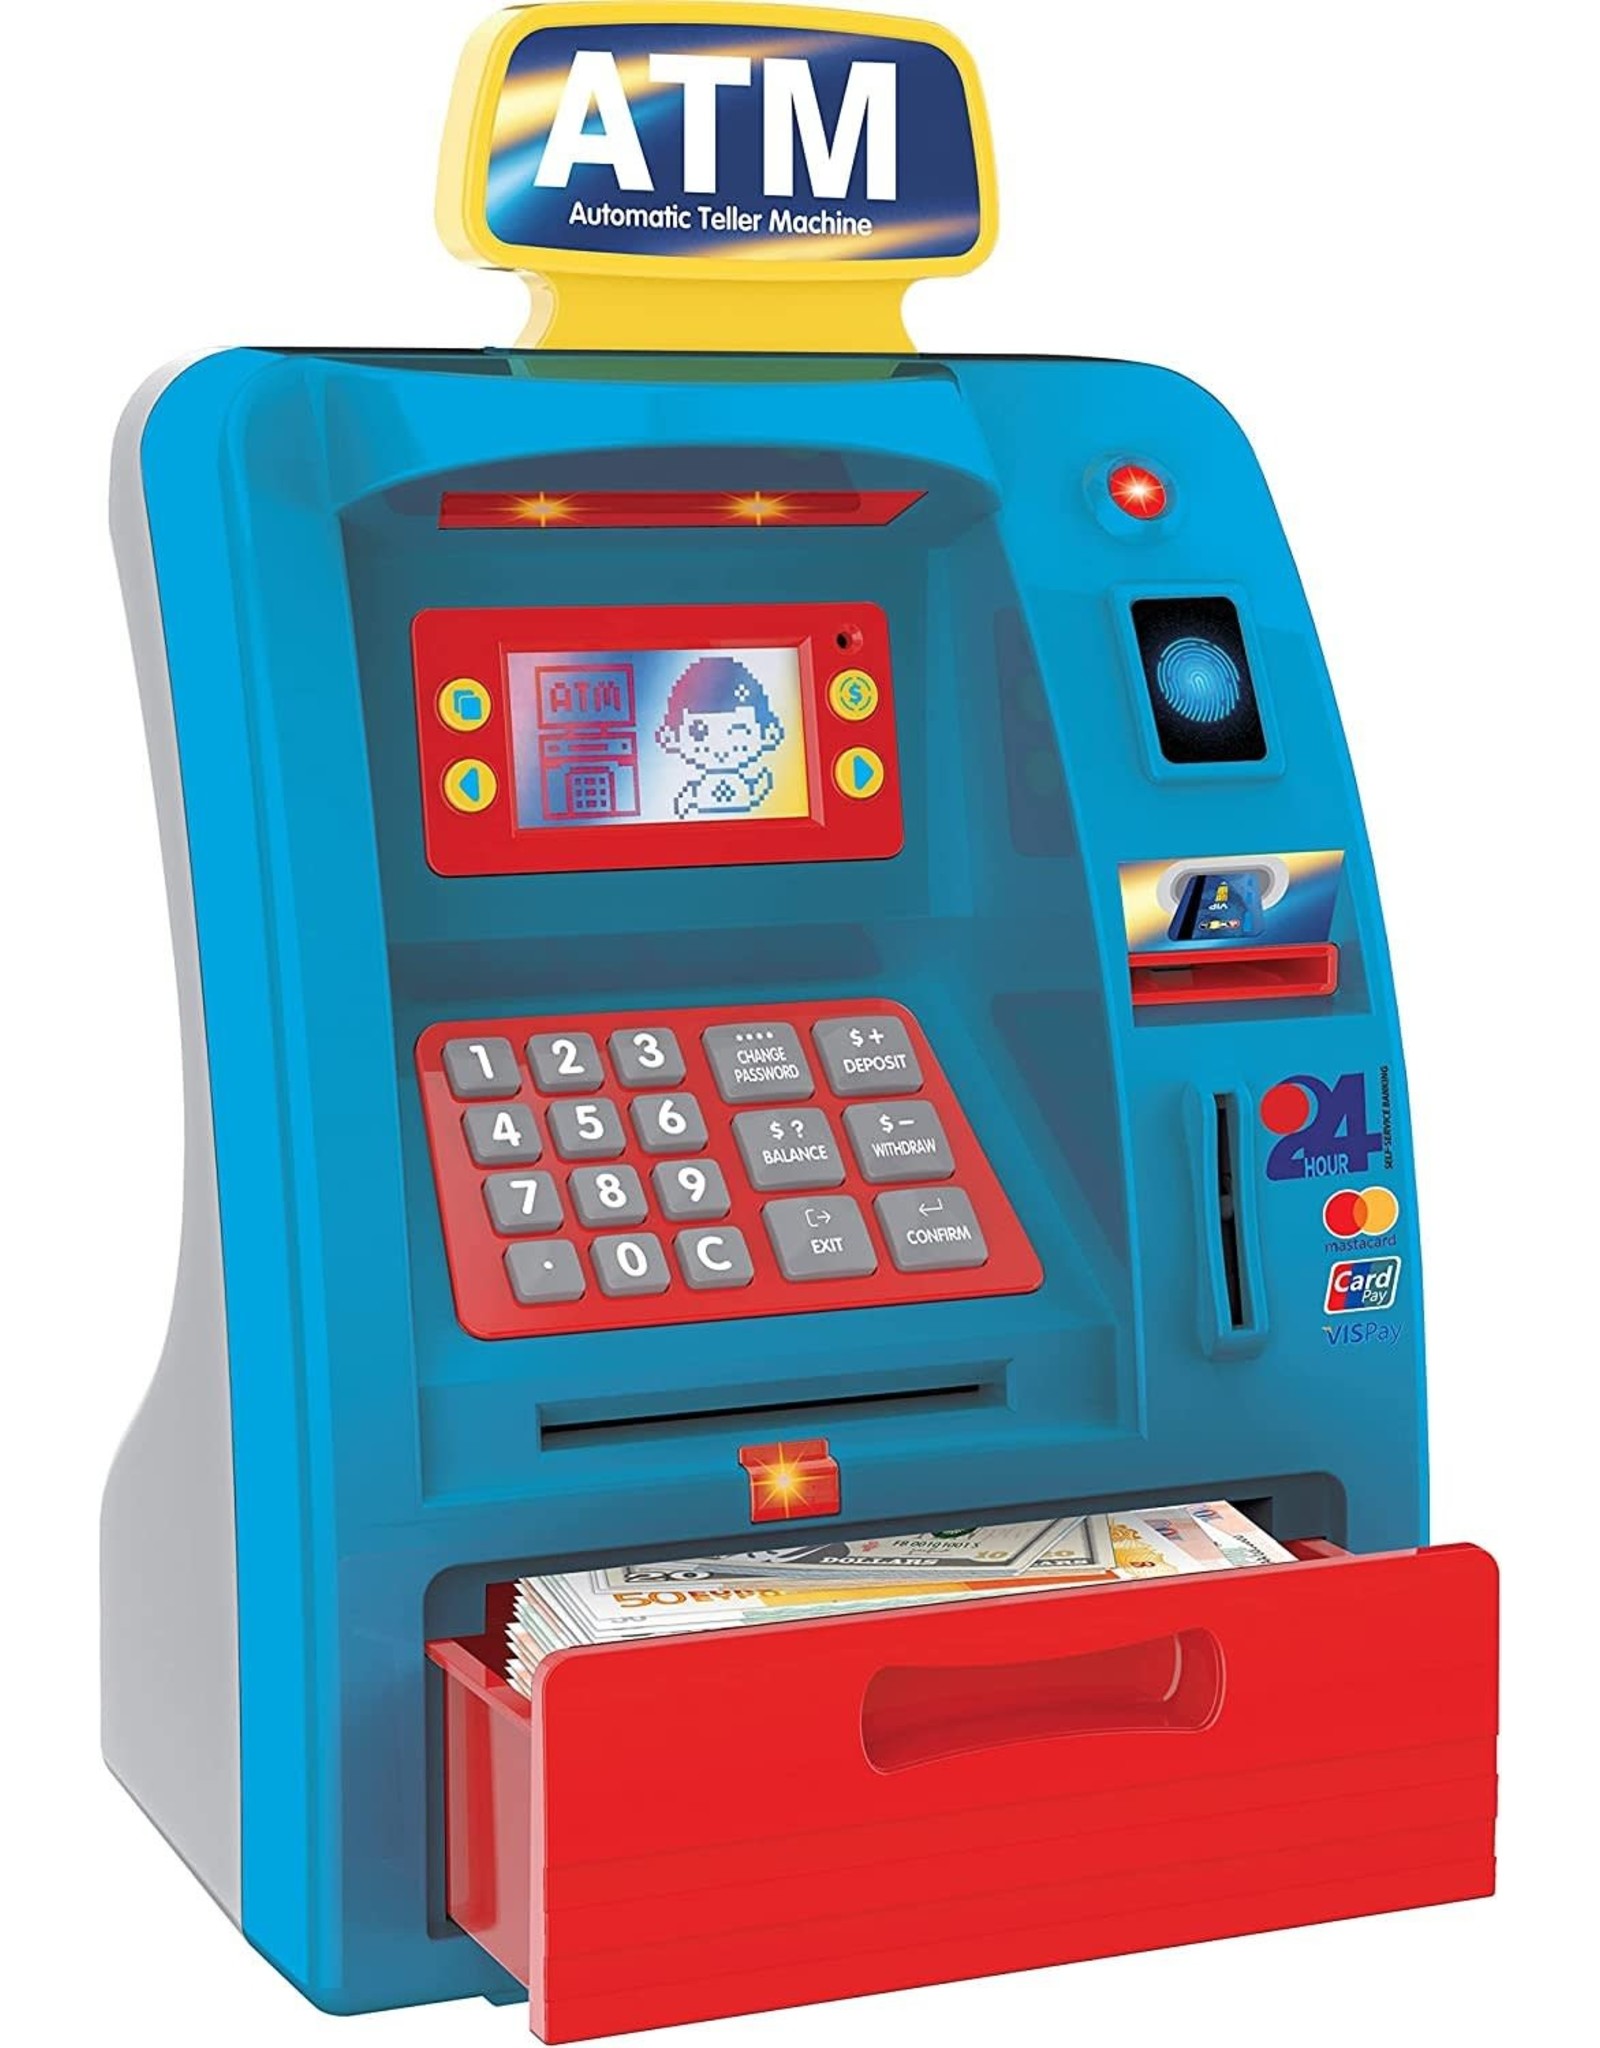 Preschool ATM